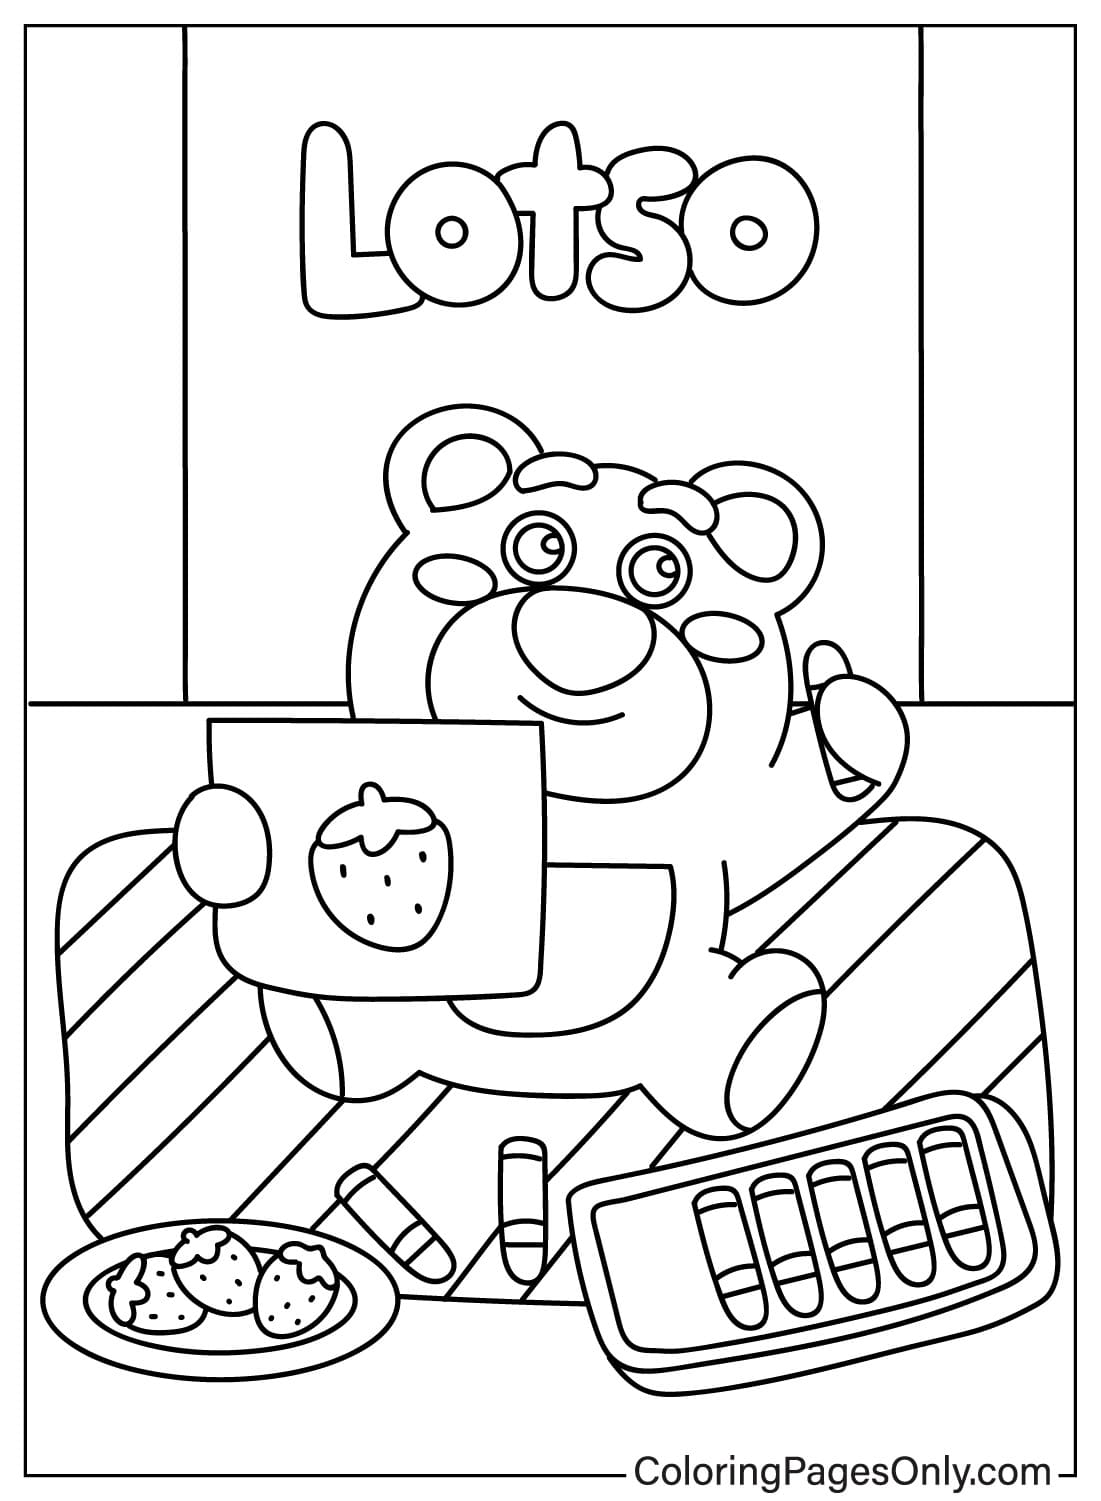 Книжка-раскраска «Медведь Лотсо» от «Медведь Лотсо»